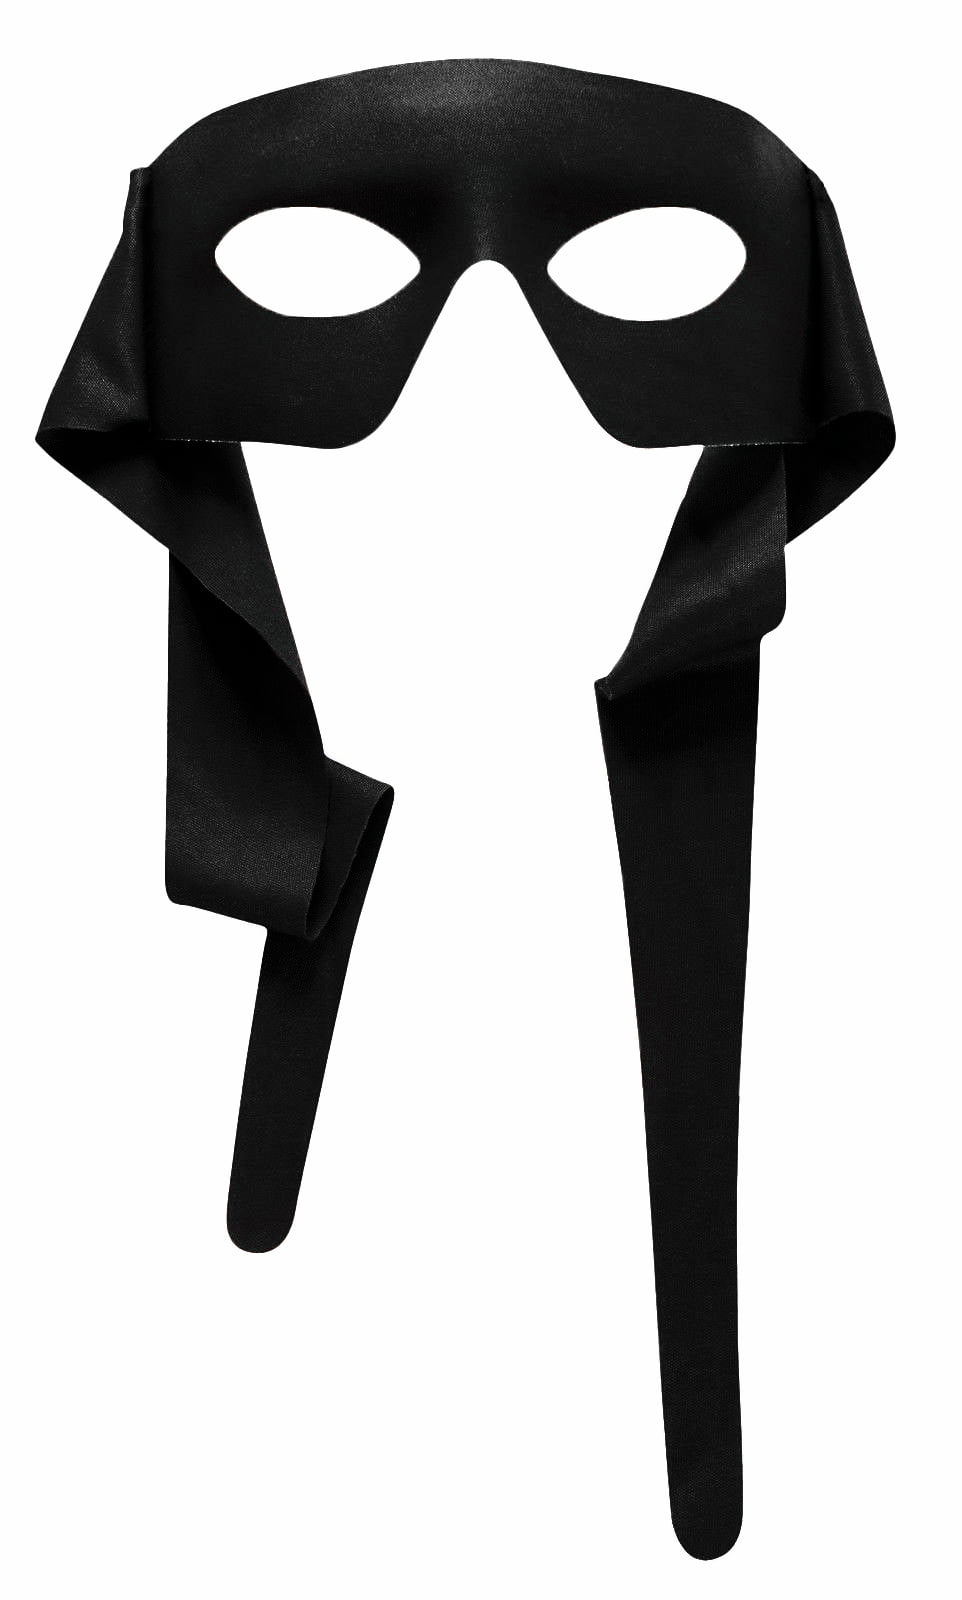 New Zorro/Bandit Themed Costume Black Hat & Eye Mask Fancy Dress Accessory 